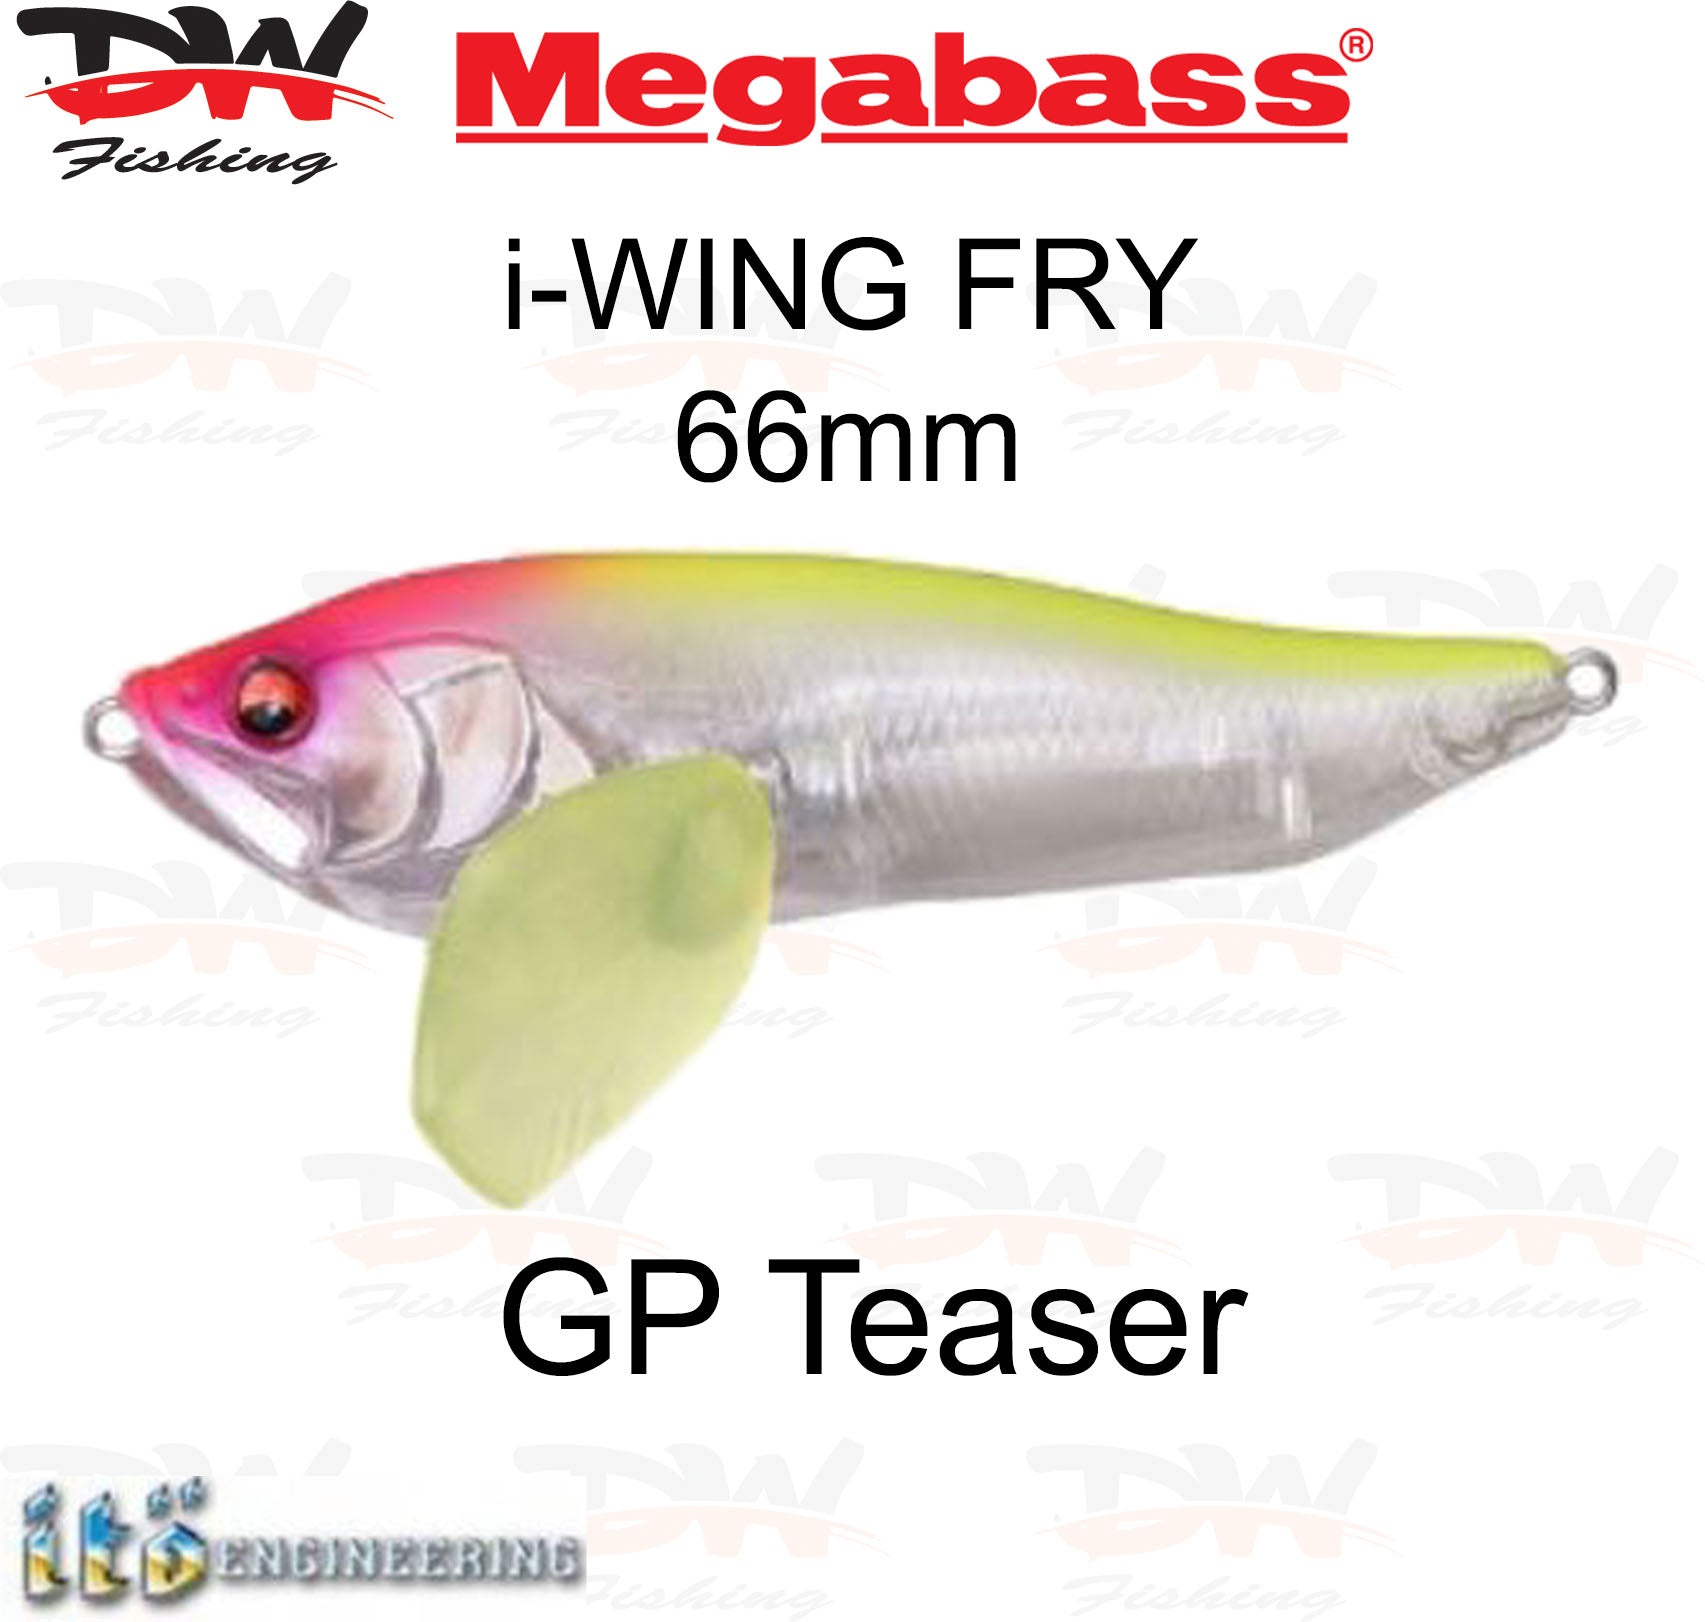 Megabass i-WING FRY surface lure single colour GP Teaser